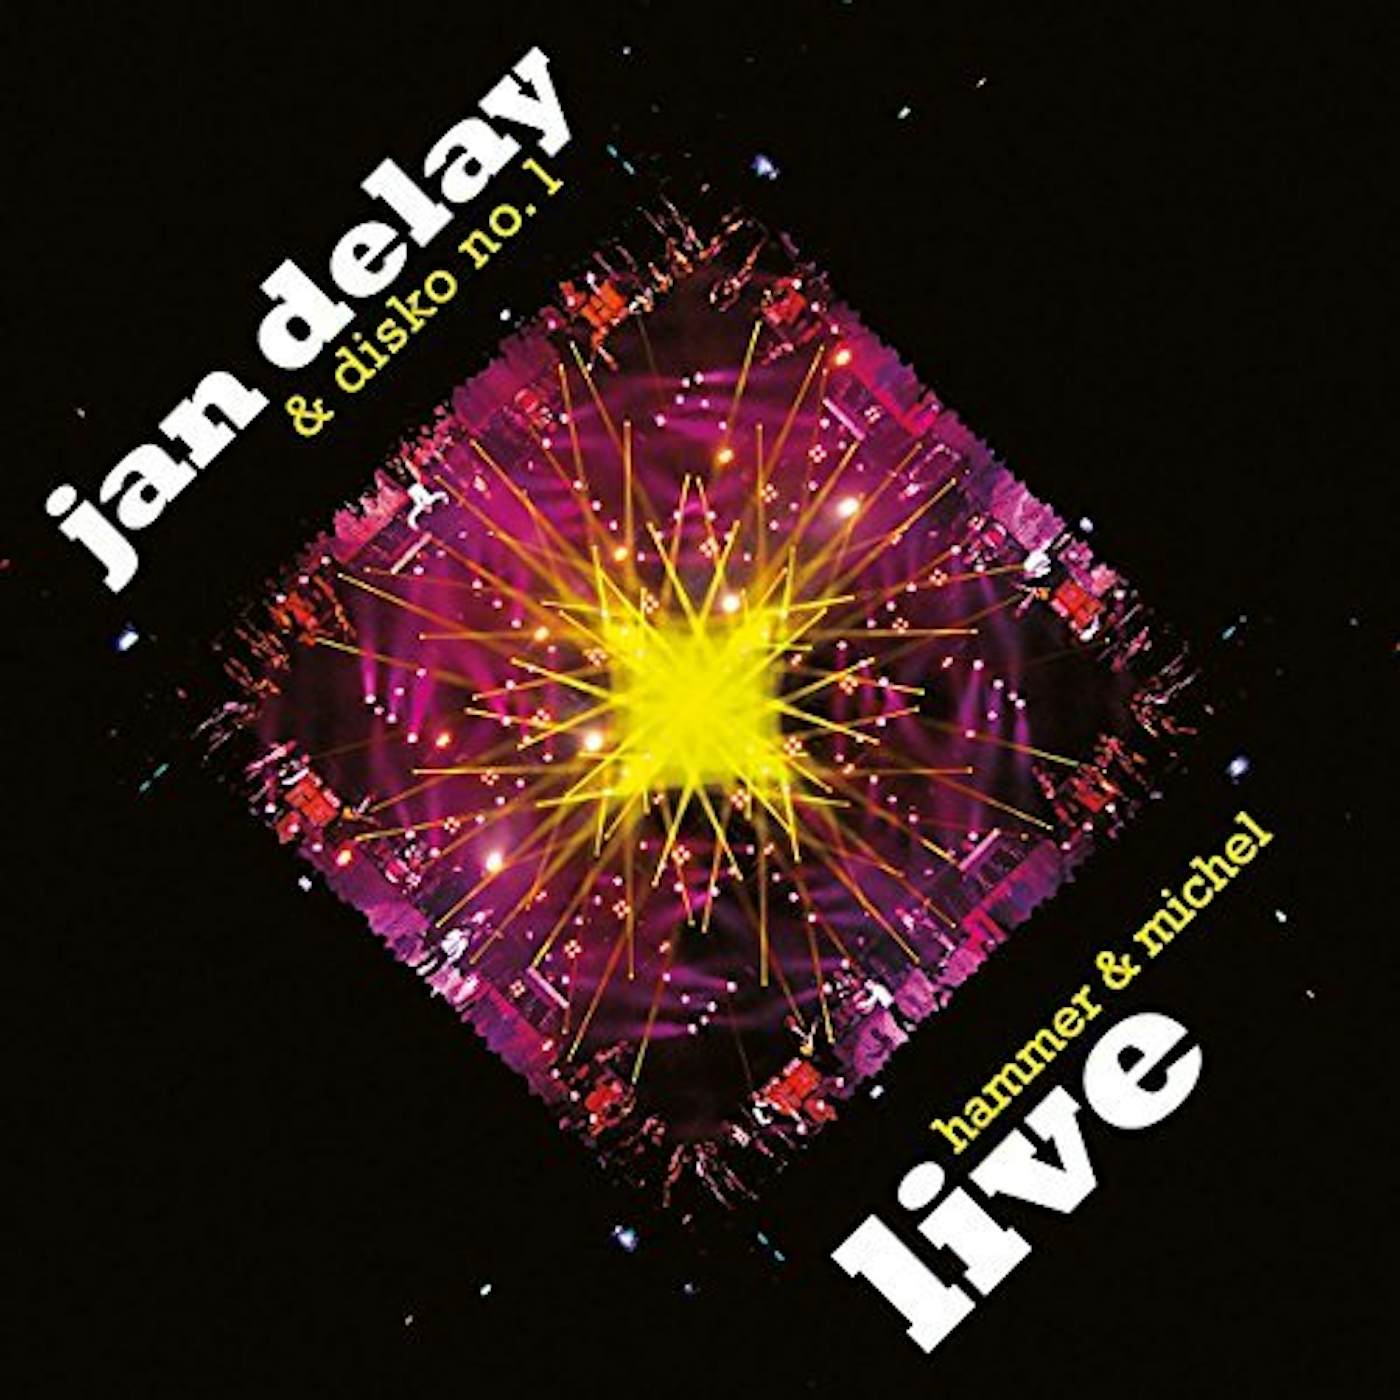 Jan Delay Hammer & Michel Live Vinyl Record